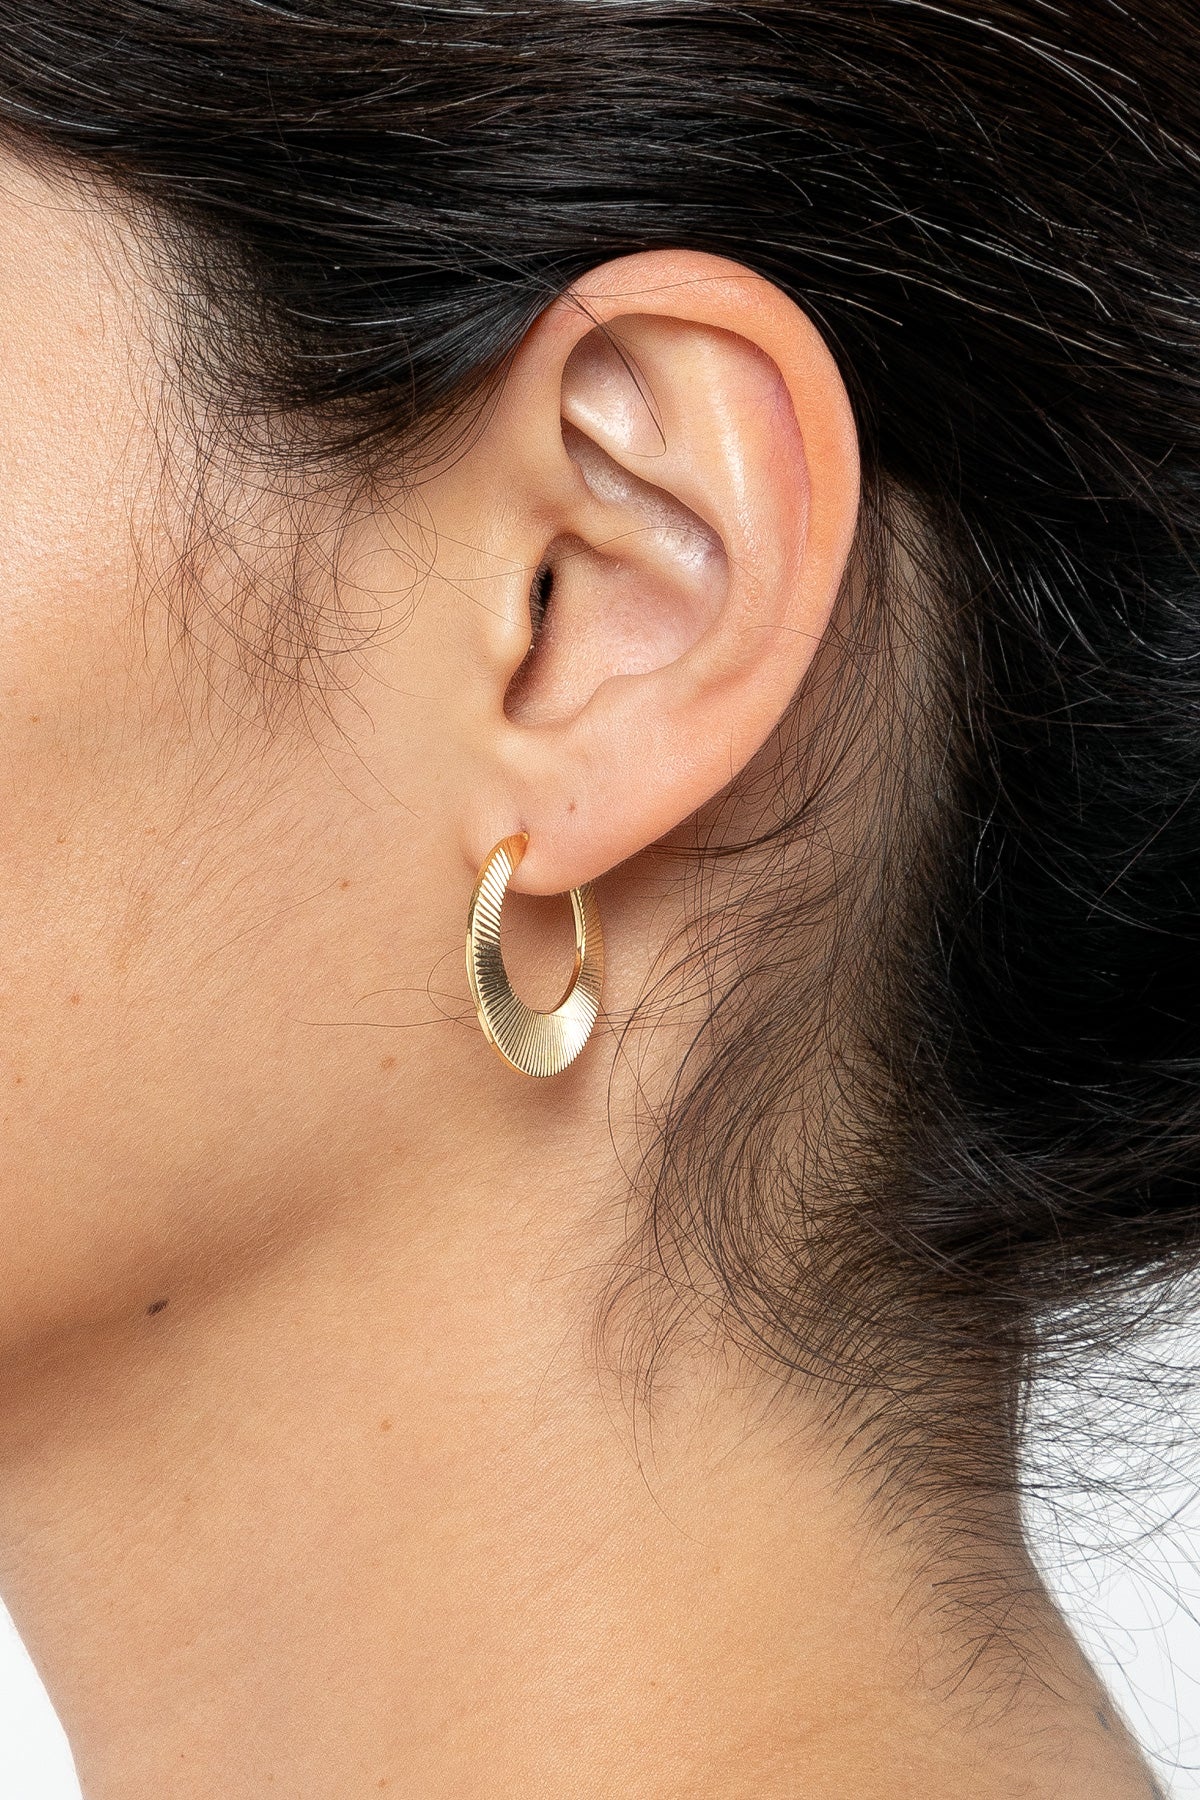 1 Pair Minimalist Small Hoop Earrings For Women Gold Tiny Round Earrings  Huggie Earrings 6mm/8mm/10mm/12mm - Hoop Earrings - AliExpress